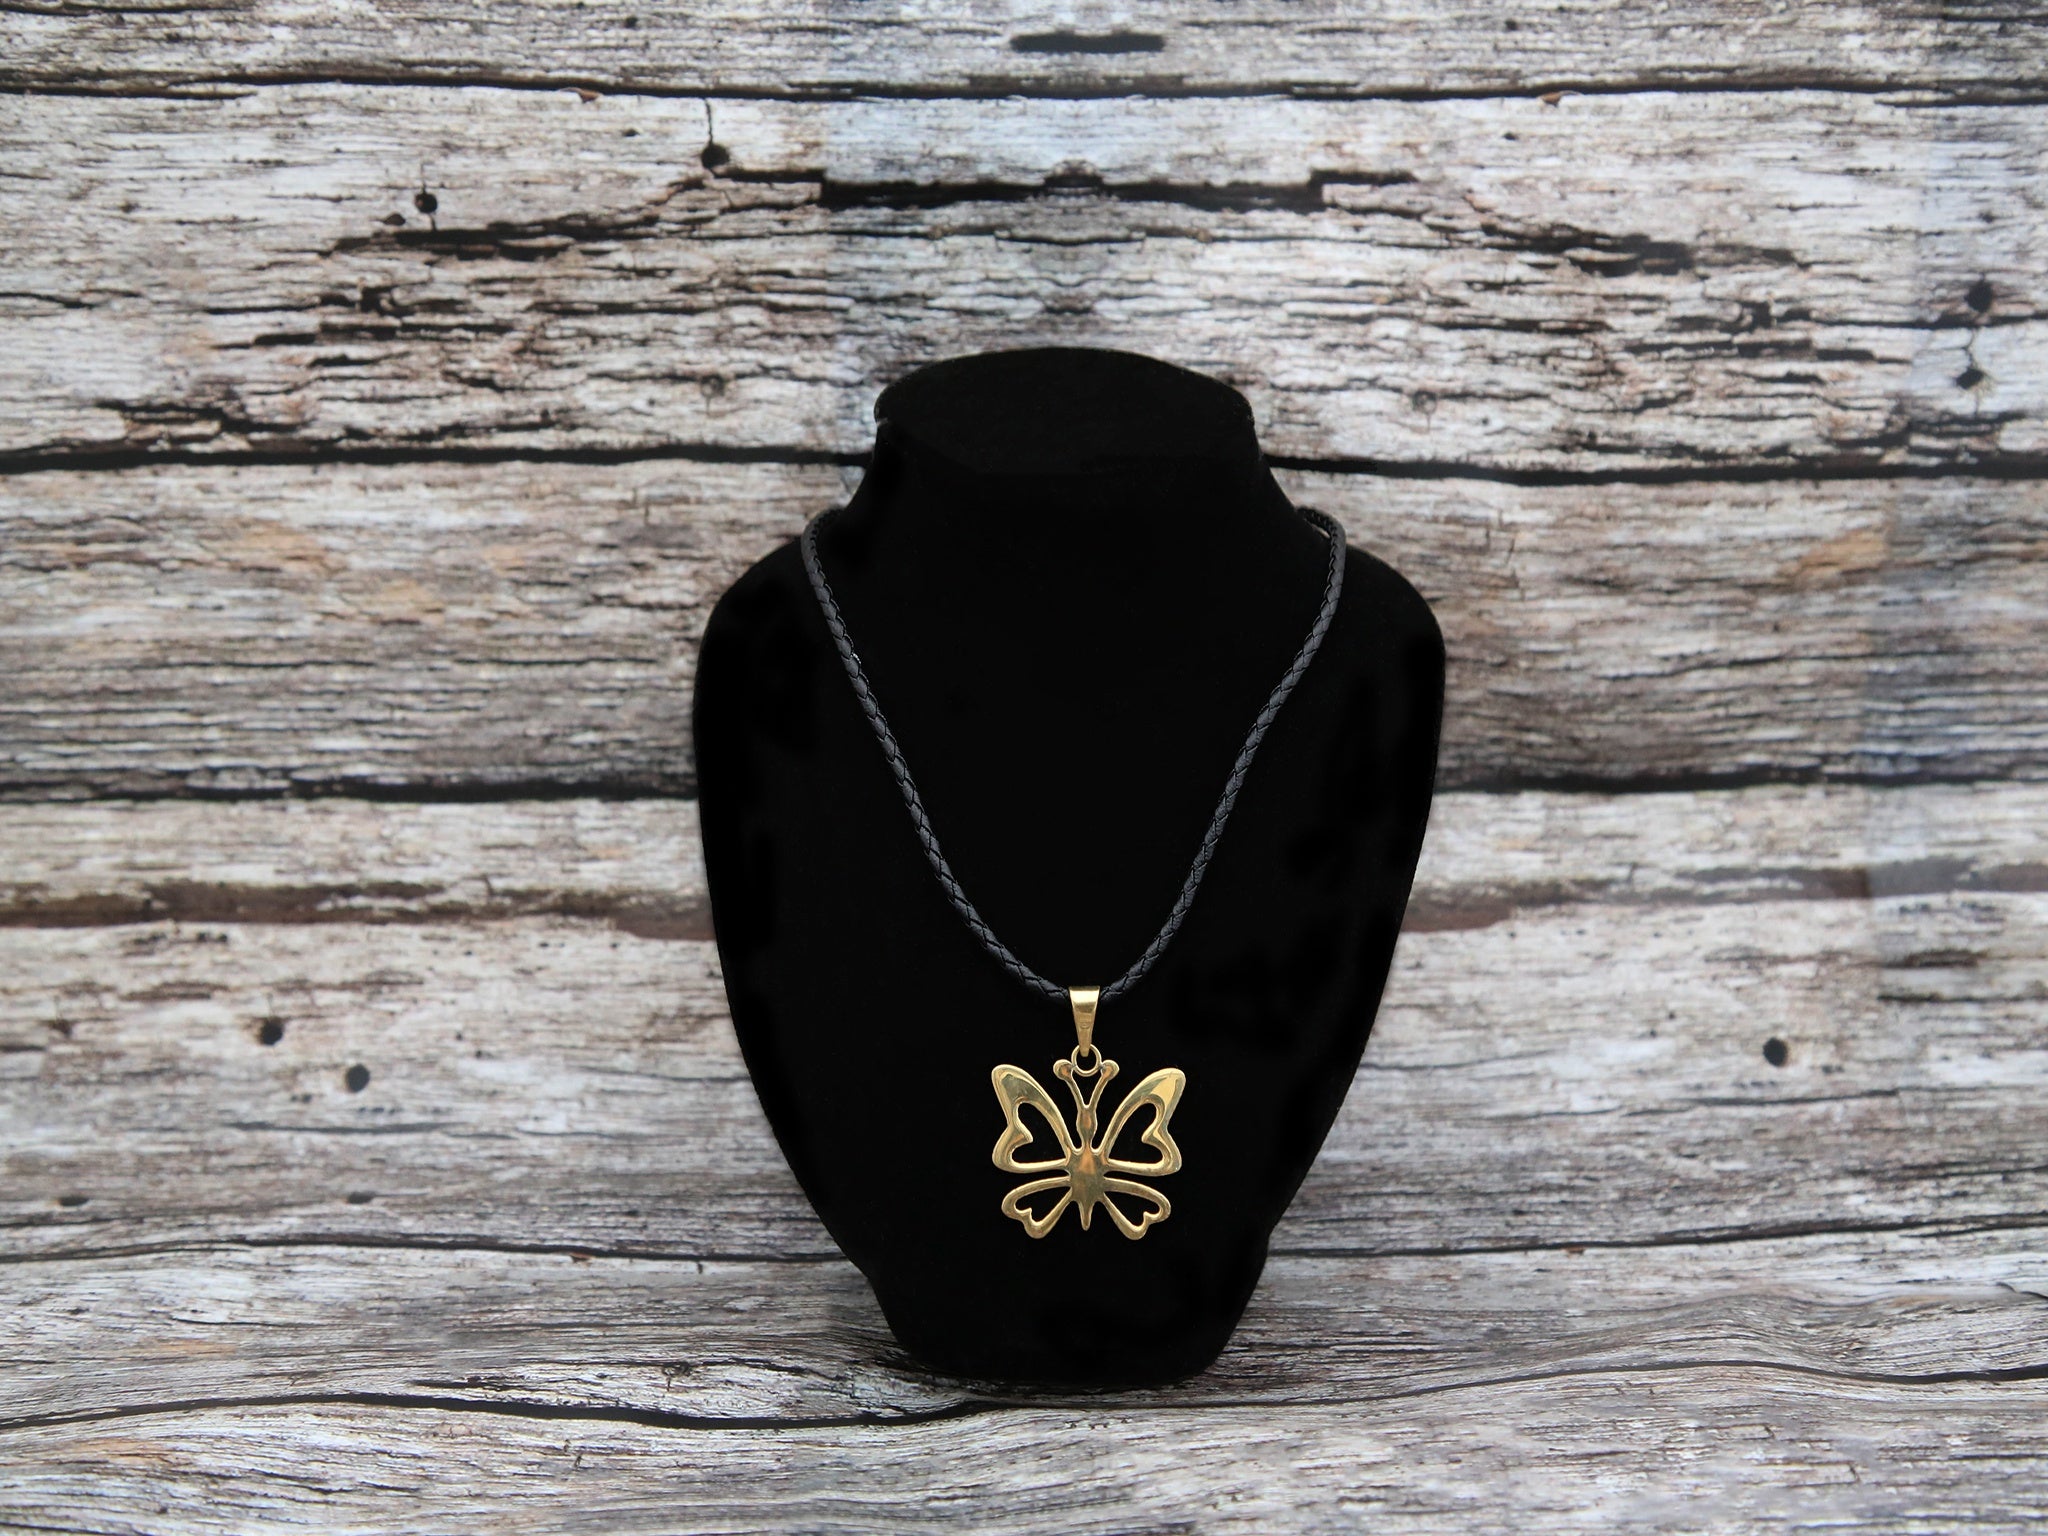 Necklace w/butterfly pendant, brass